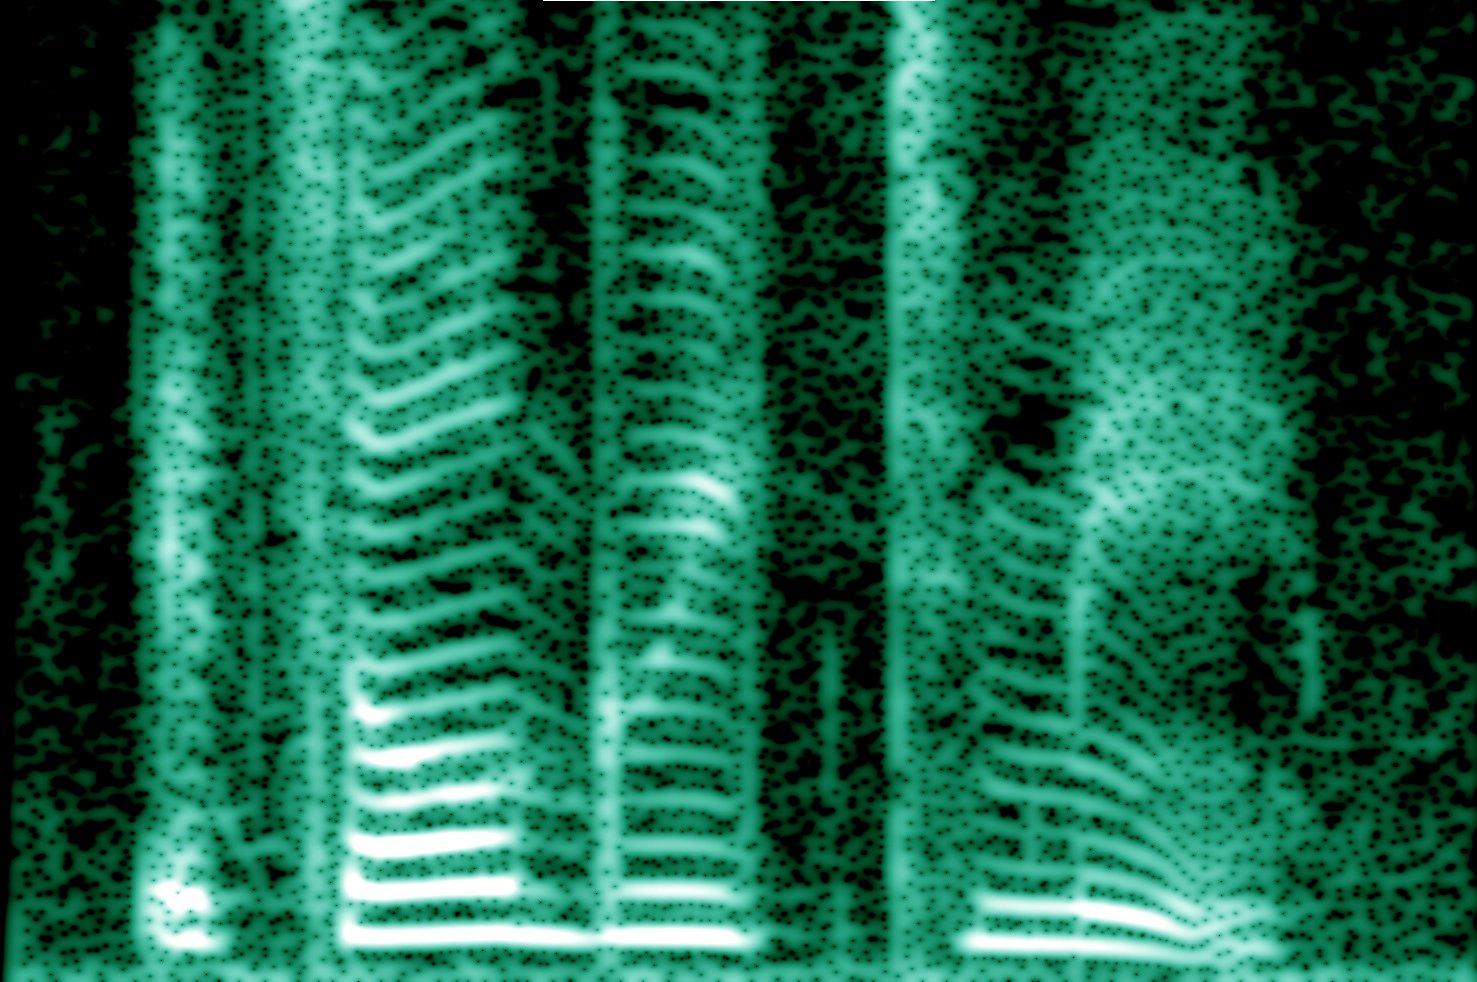 Human voice spectrogram